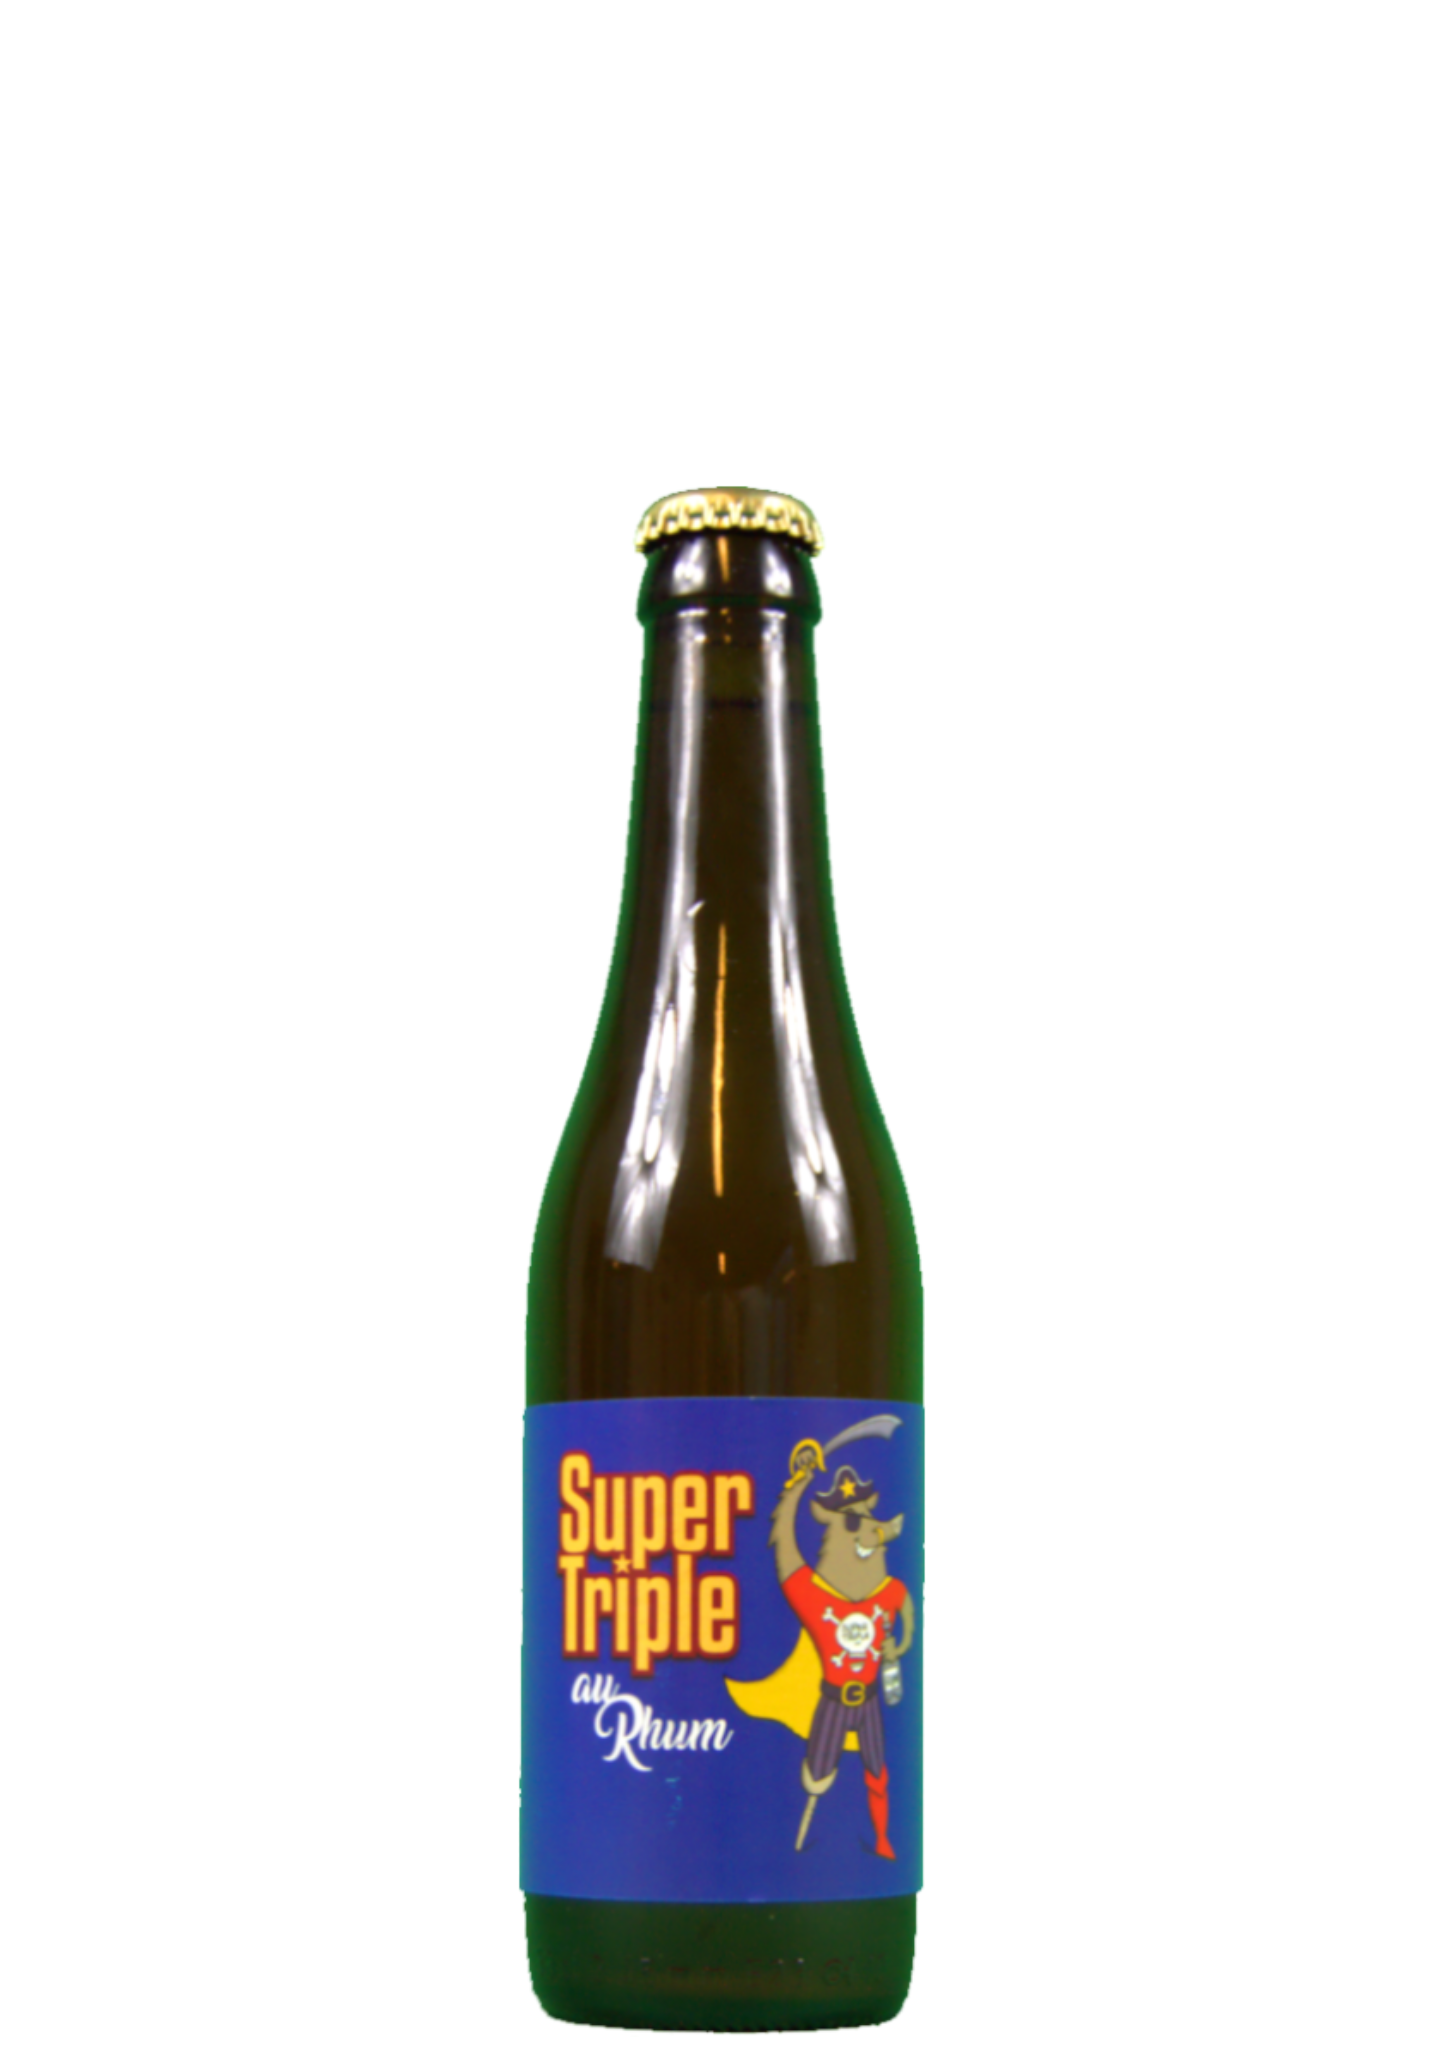 Super Triple Au Rhum 9,5% 33cl